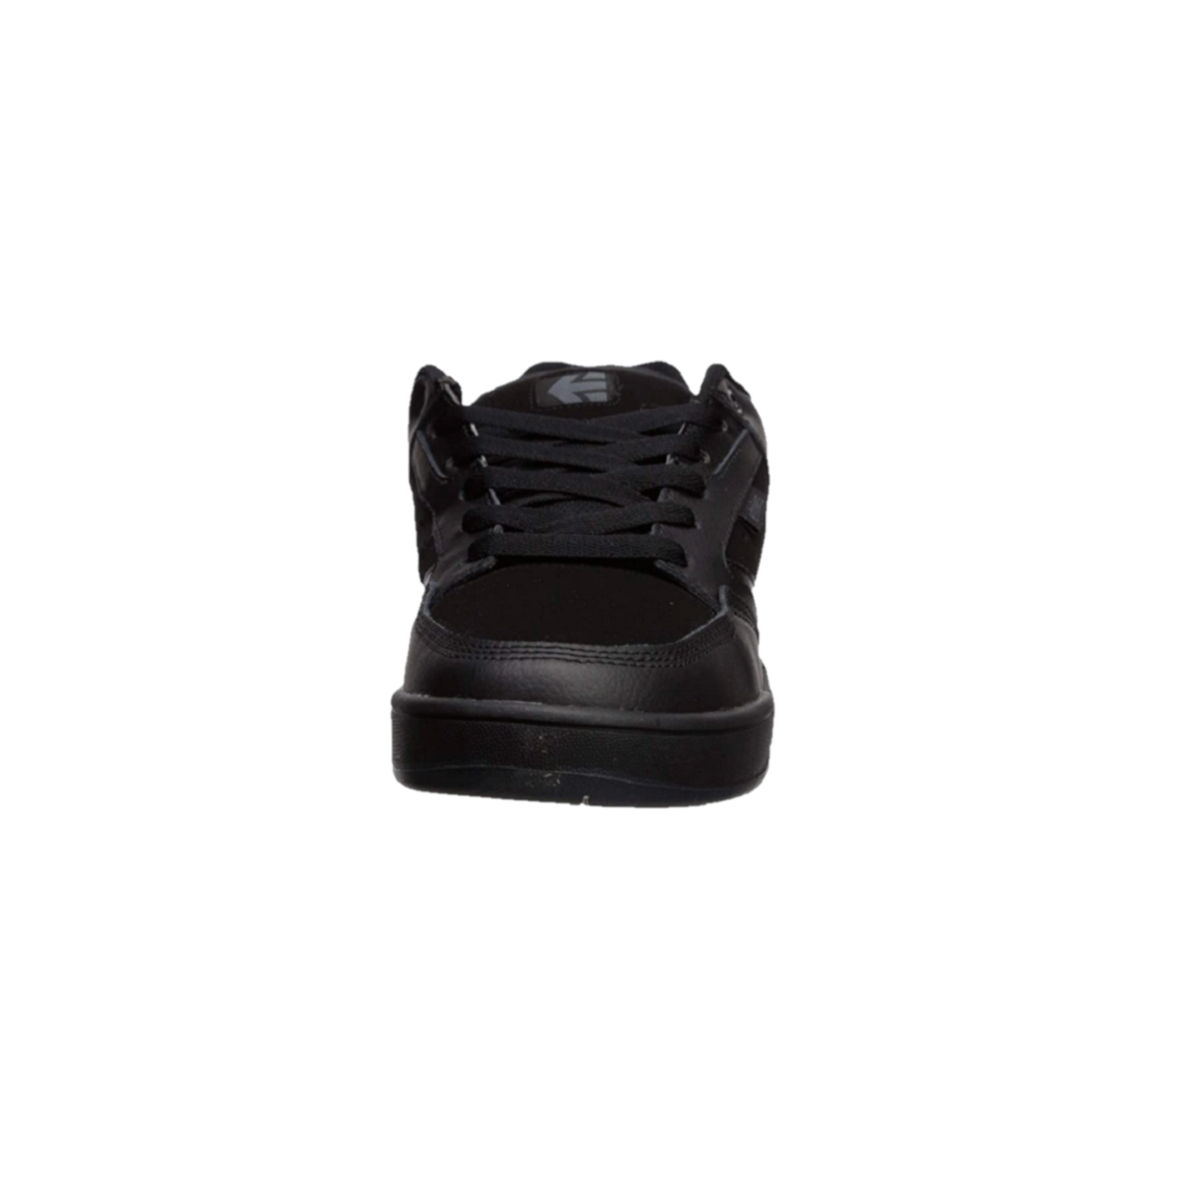 ETNIES 4101000402 540 CARTEL MN'S (Medium) Black/Black/Grey Leather/Synthetic Skate Shoes